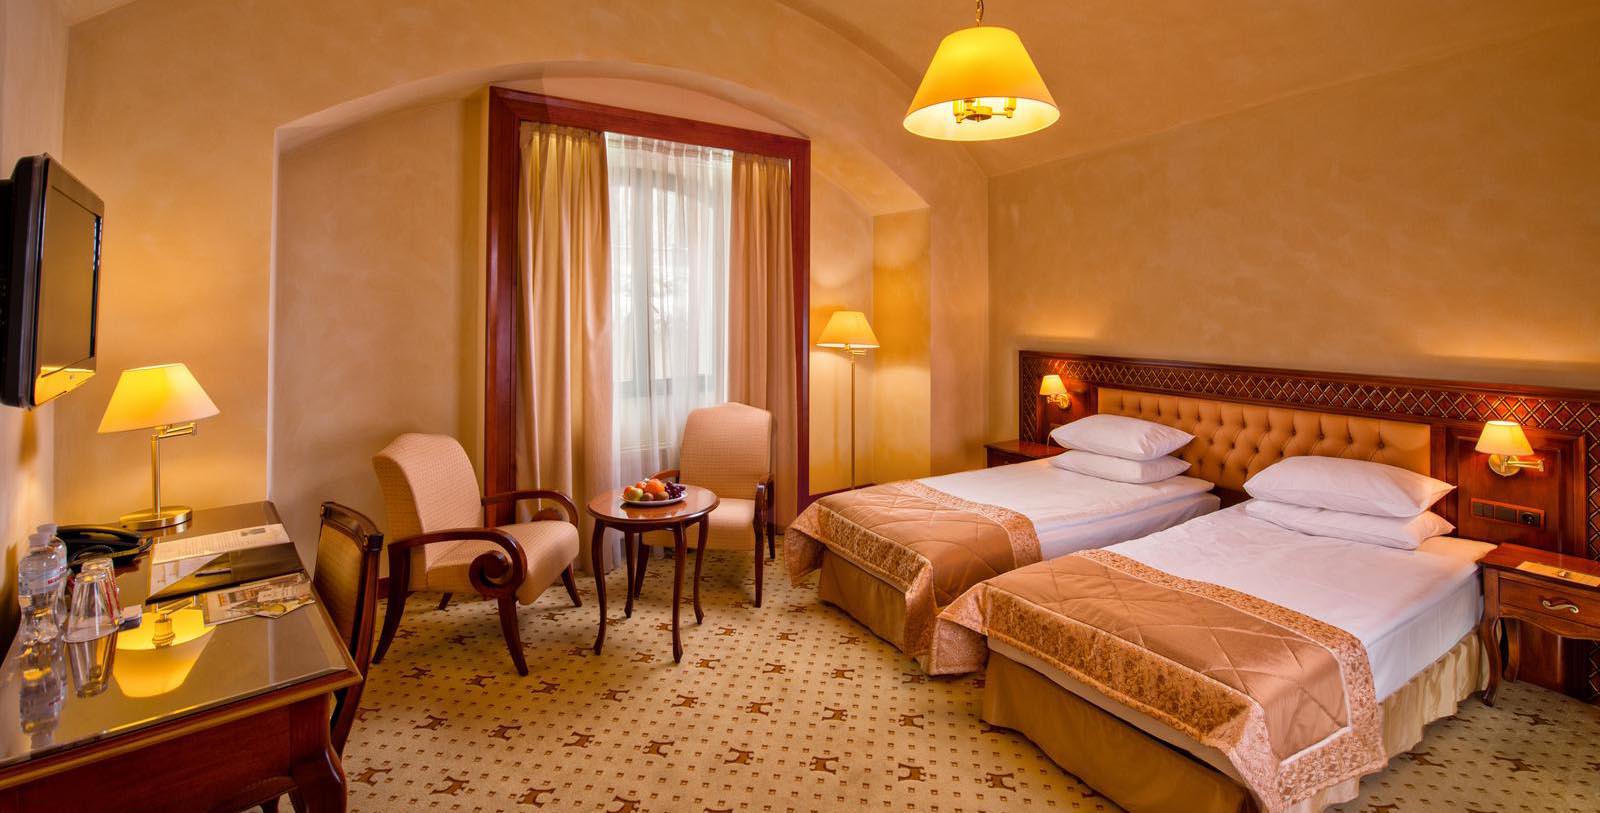 Image of guestroom Citadel Inn Hotel & Resort, 1850, Member of Historic Hotels Worldwide, in Lviv, Ukraine, Accommodations